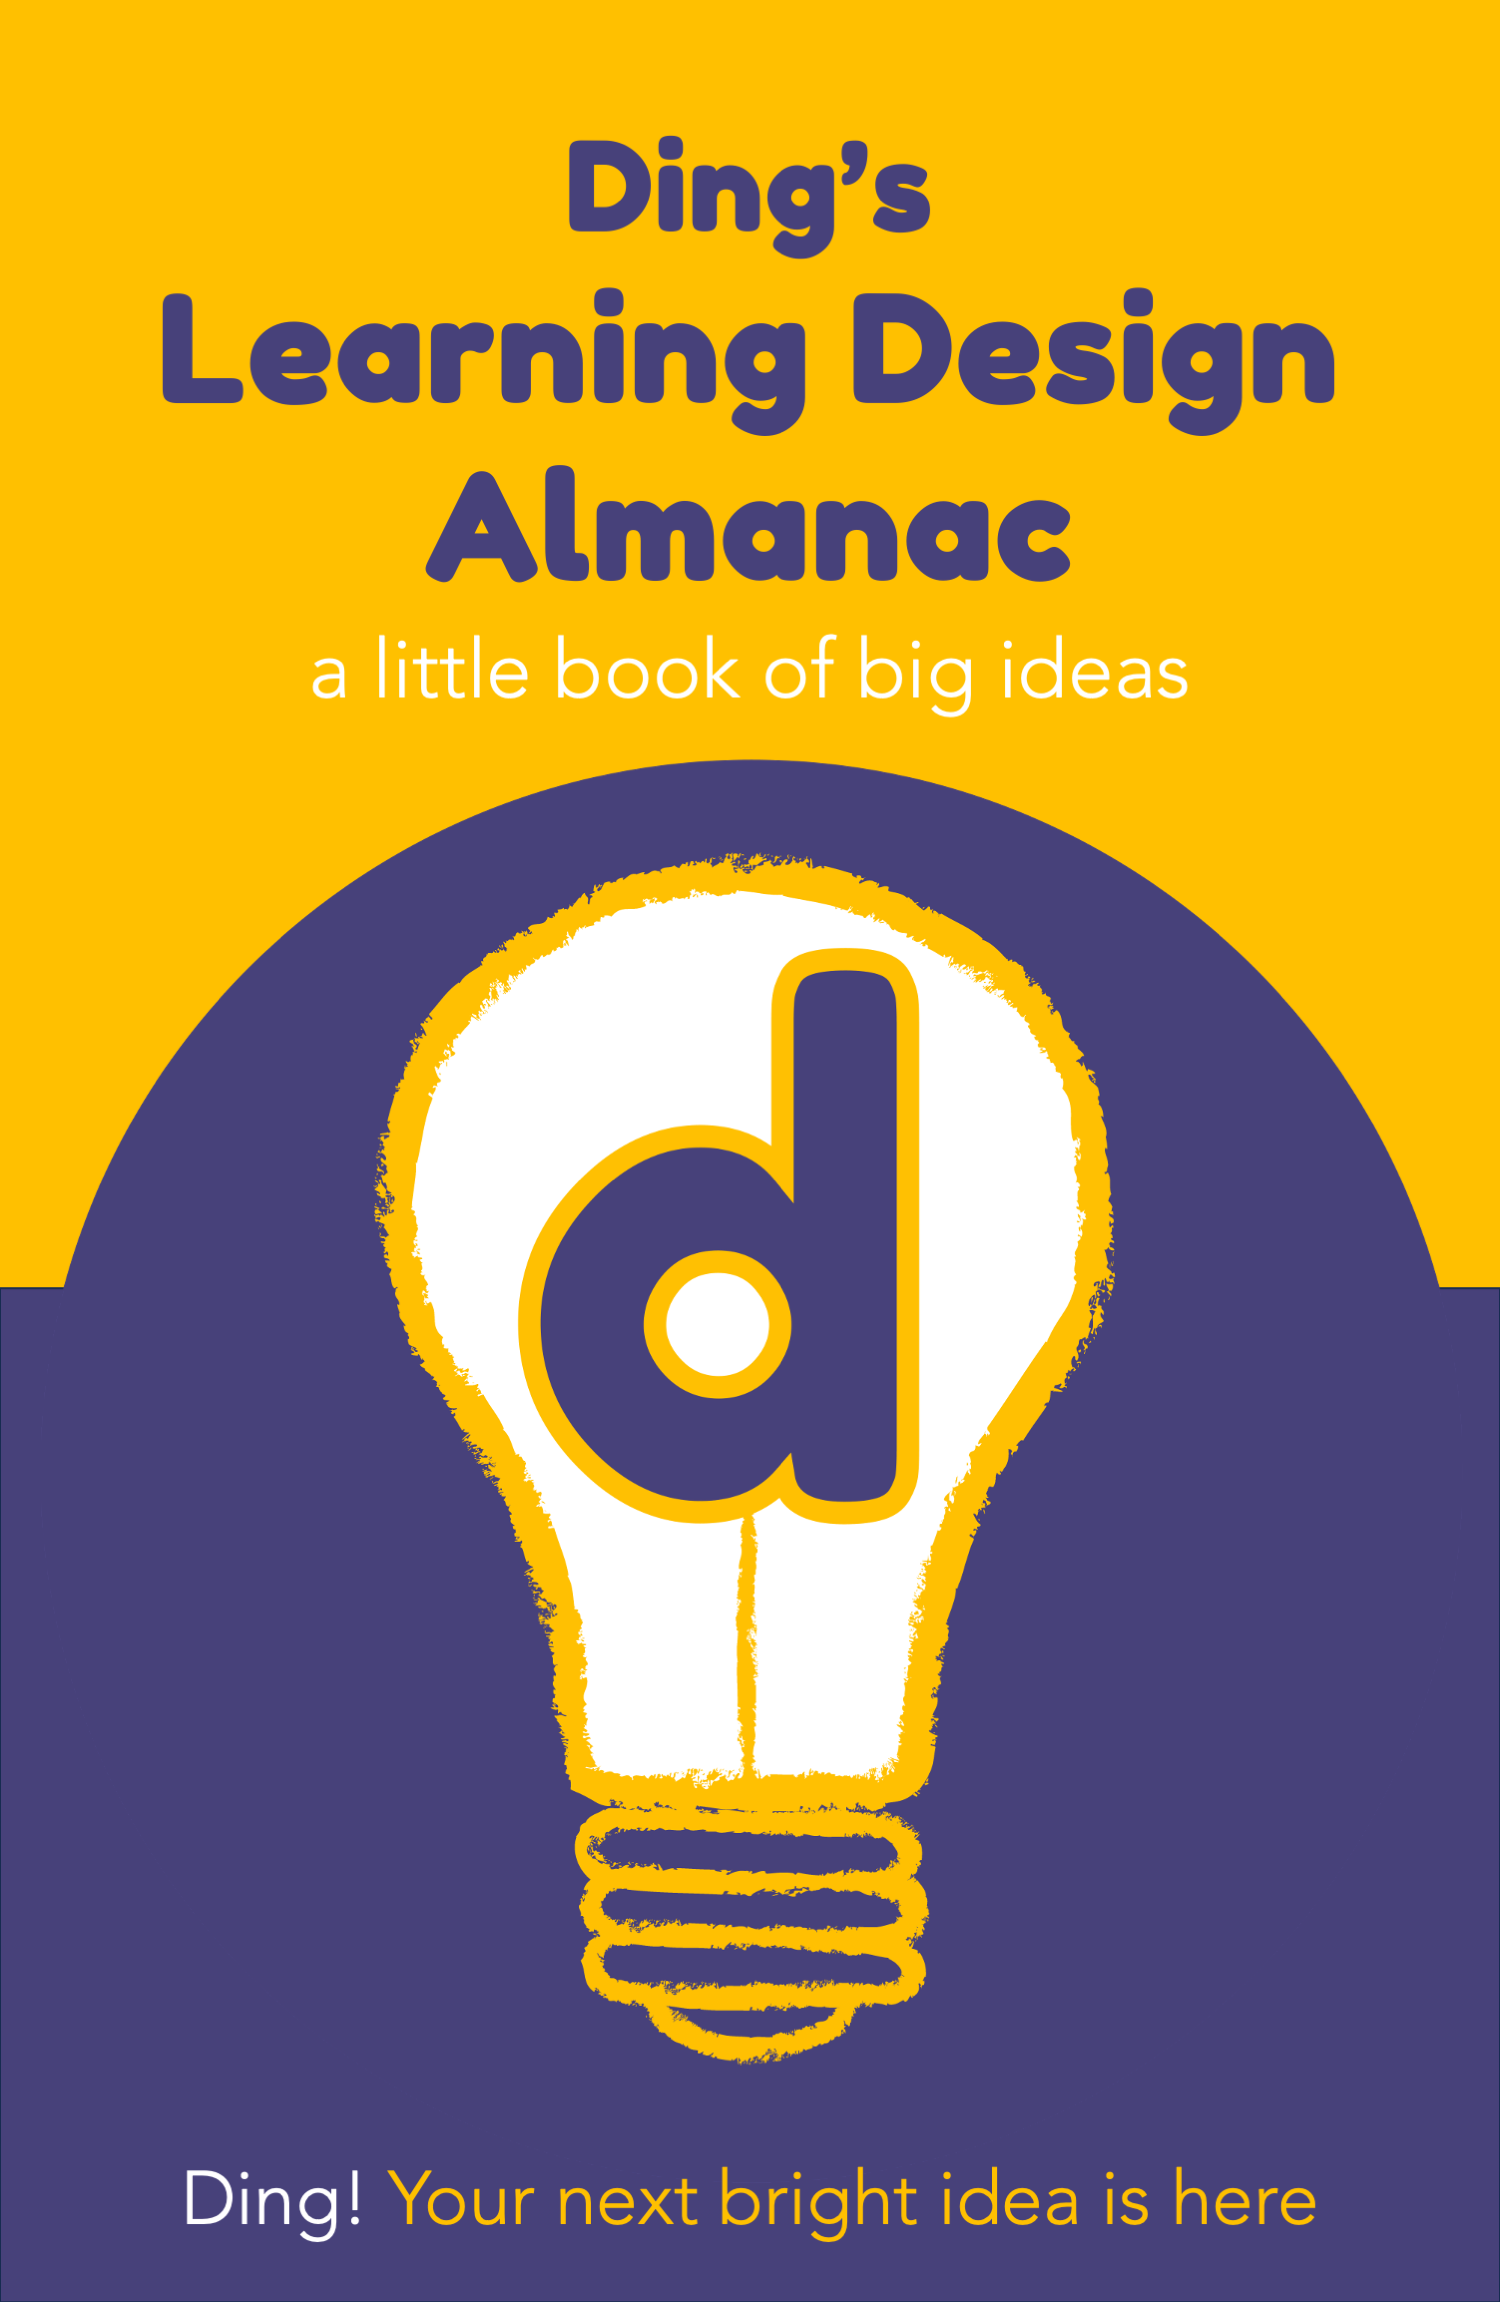 Ding's Learning Design Almanac